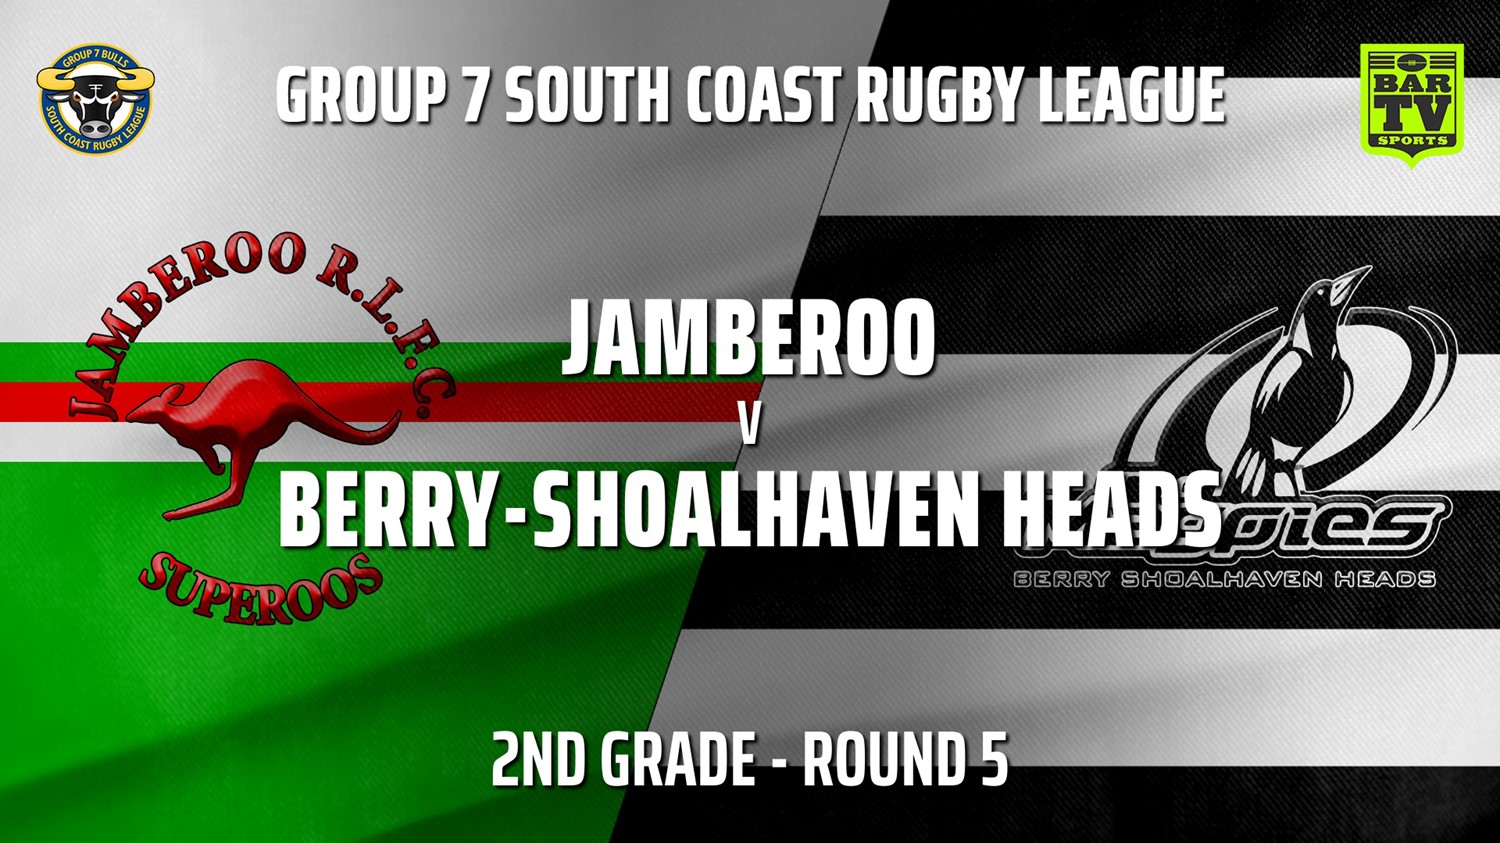 210515-Group 7 RL Round 5 - 2nd Grade - Jamberoo v Berry-Shoalhaven Heads Slate Image